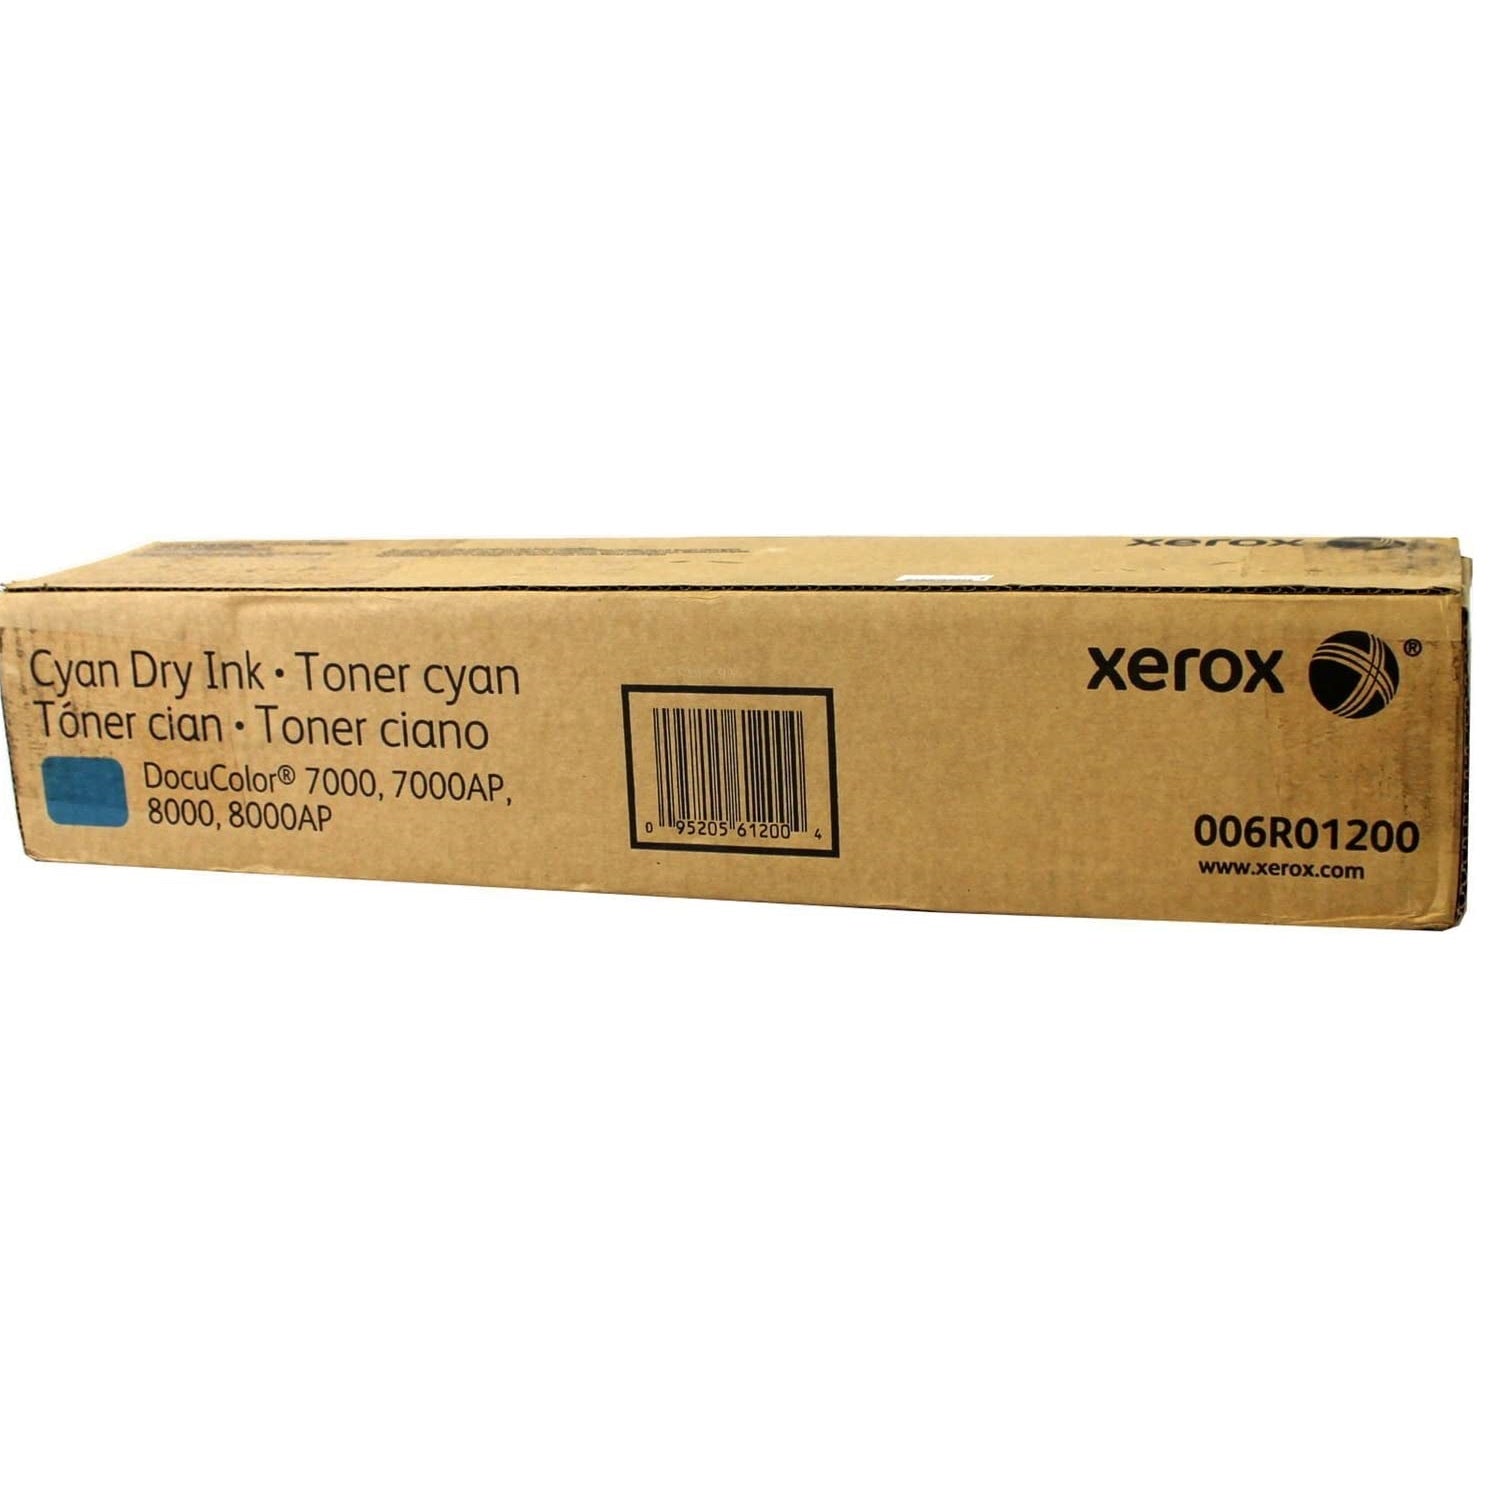 Absolute Toner Genuine OEM Xerox 006R01200 Cyan Dry Ink Cartridge | DocuColor 8000 Cyan Toner Original Xerox Cartridges